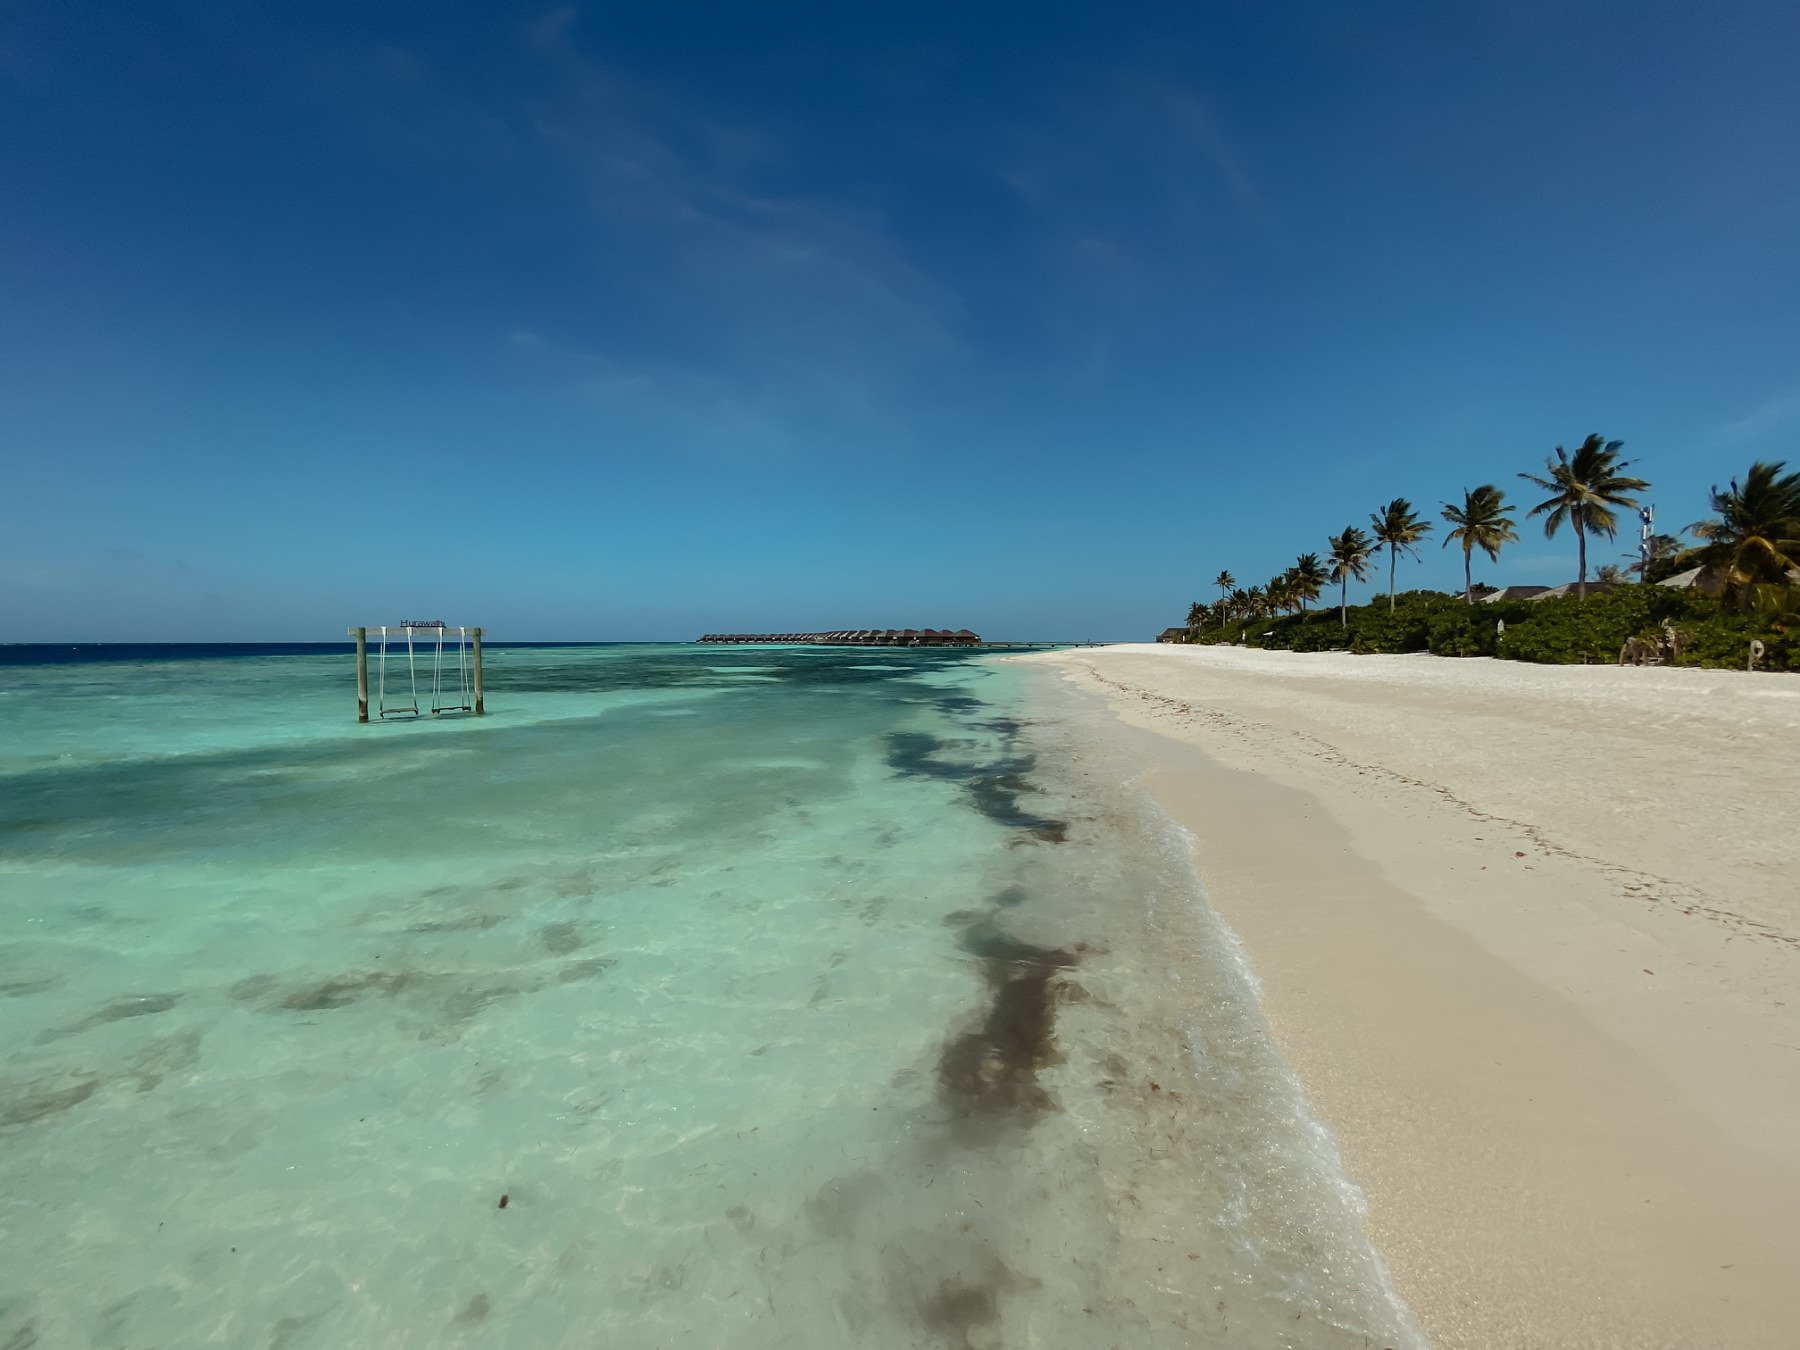 honeymoon advice the maldives beach scene with swings over the ocean